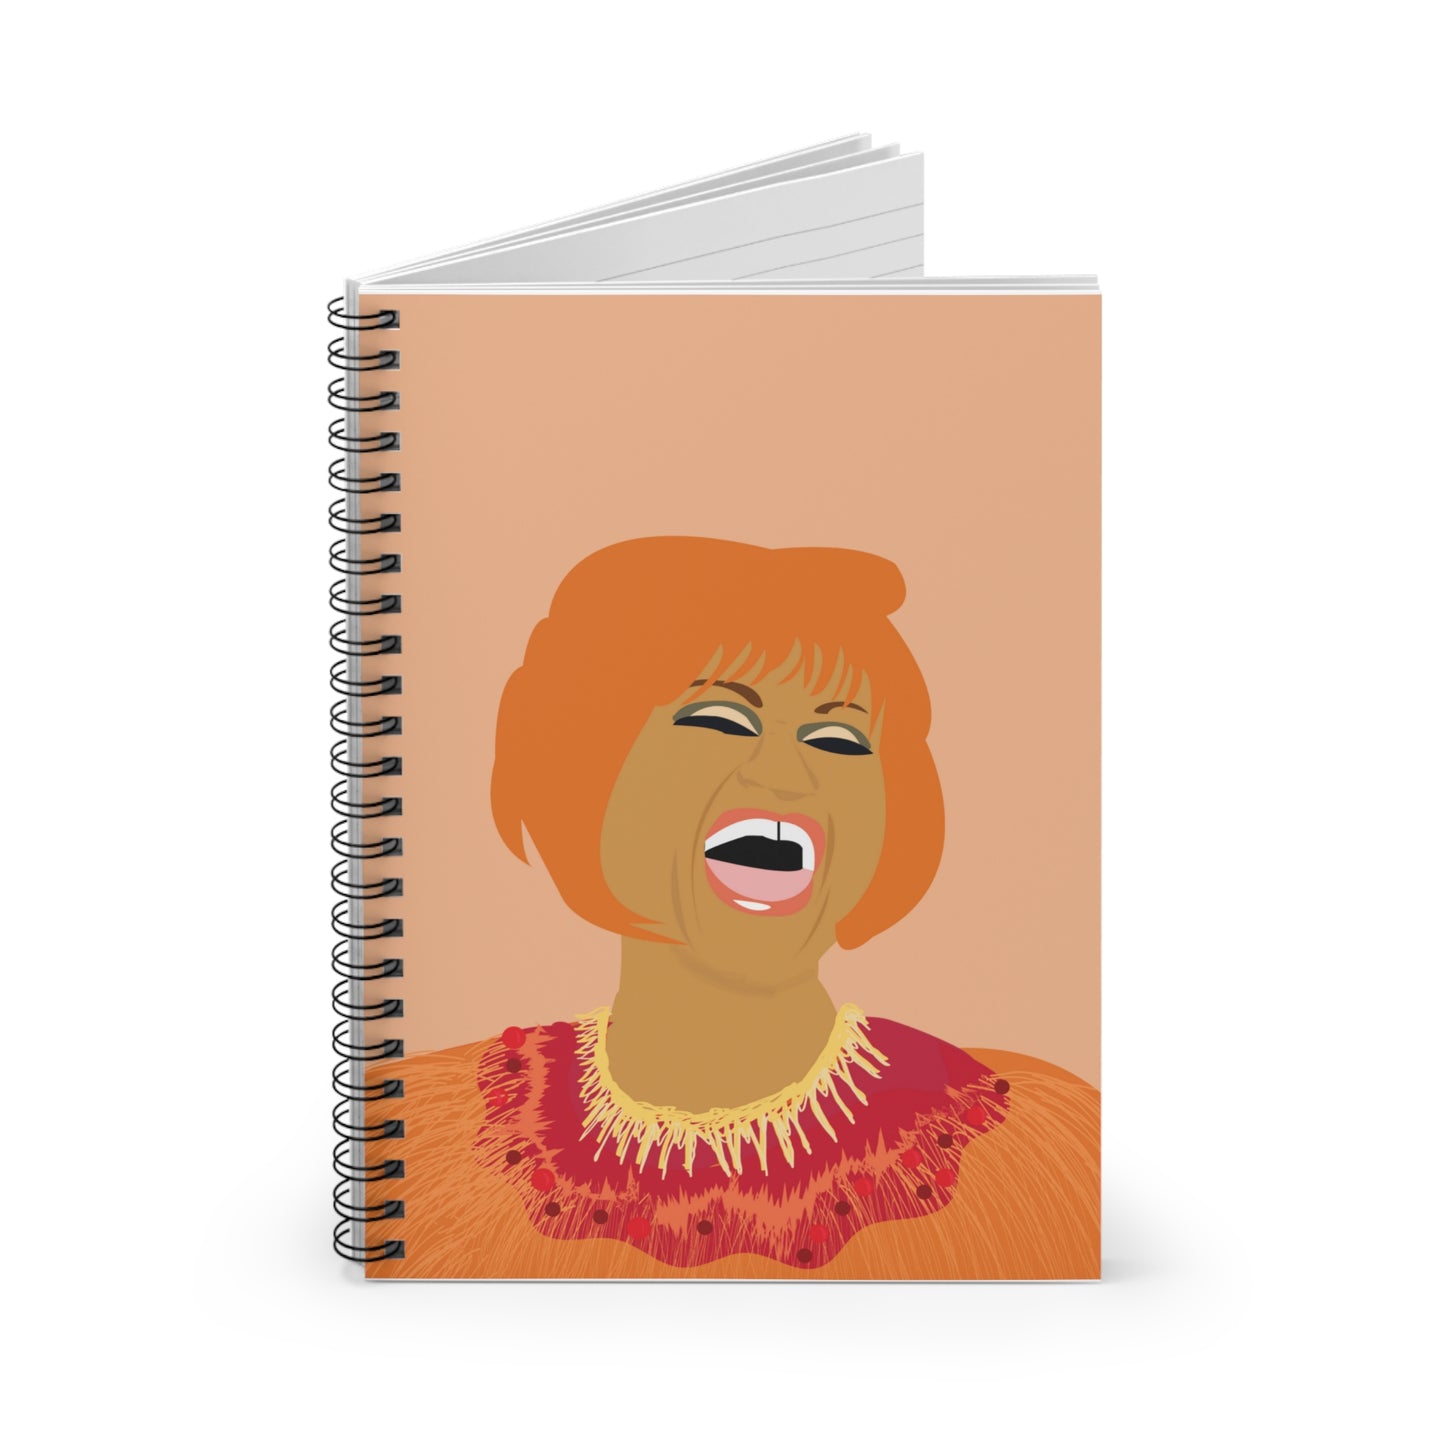 Celia Cruz Spiral Notebook - Ruled Line